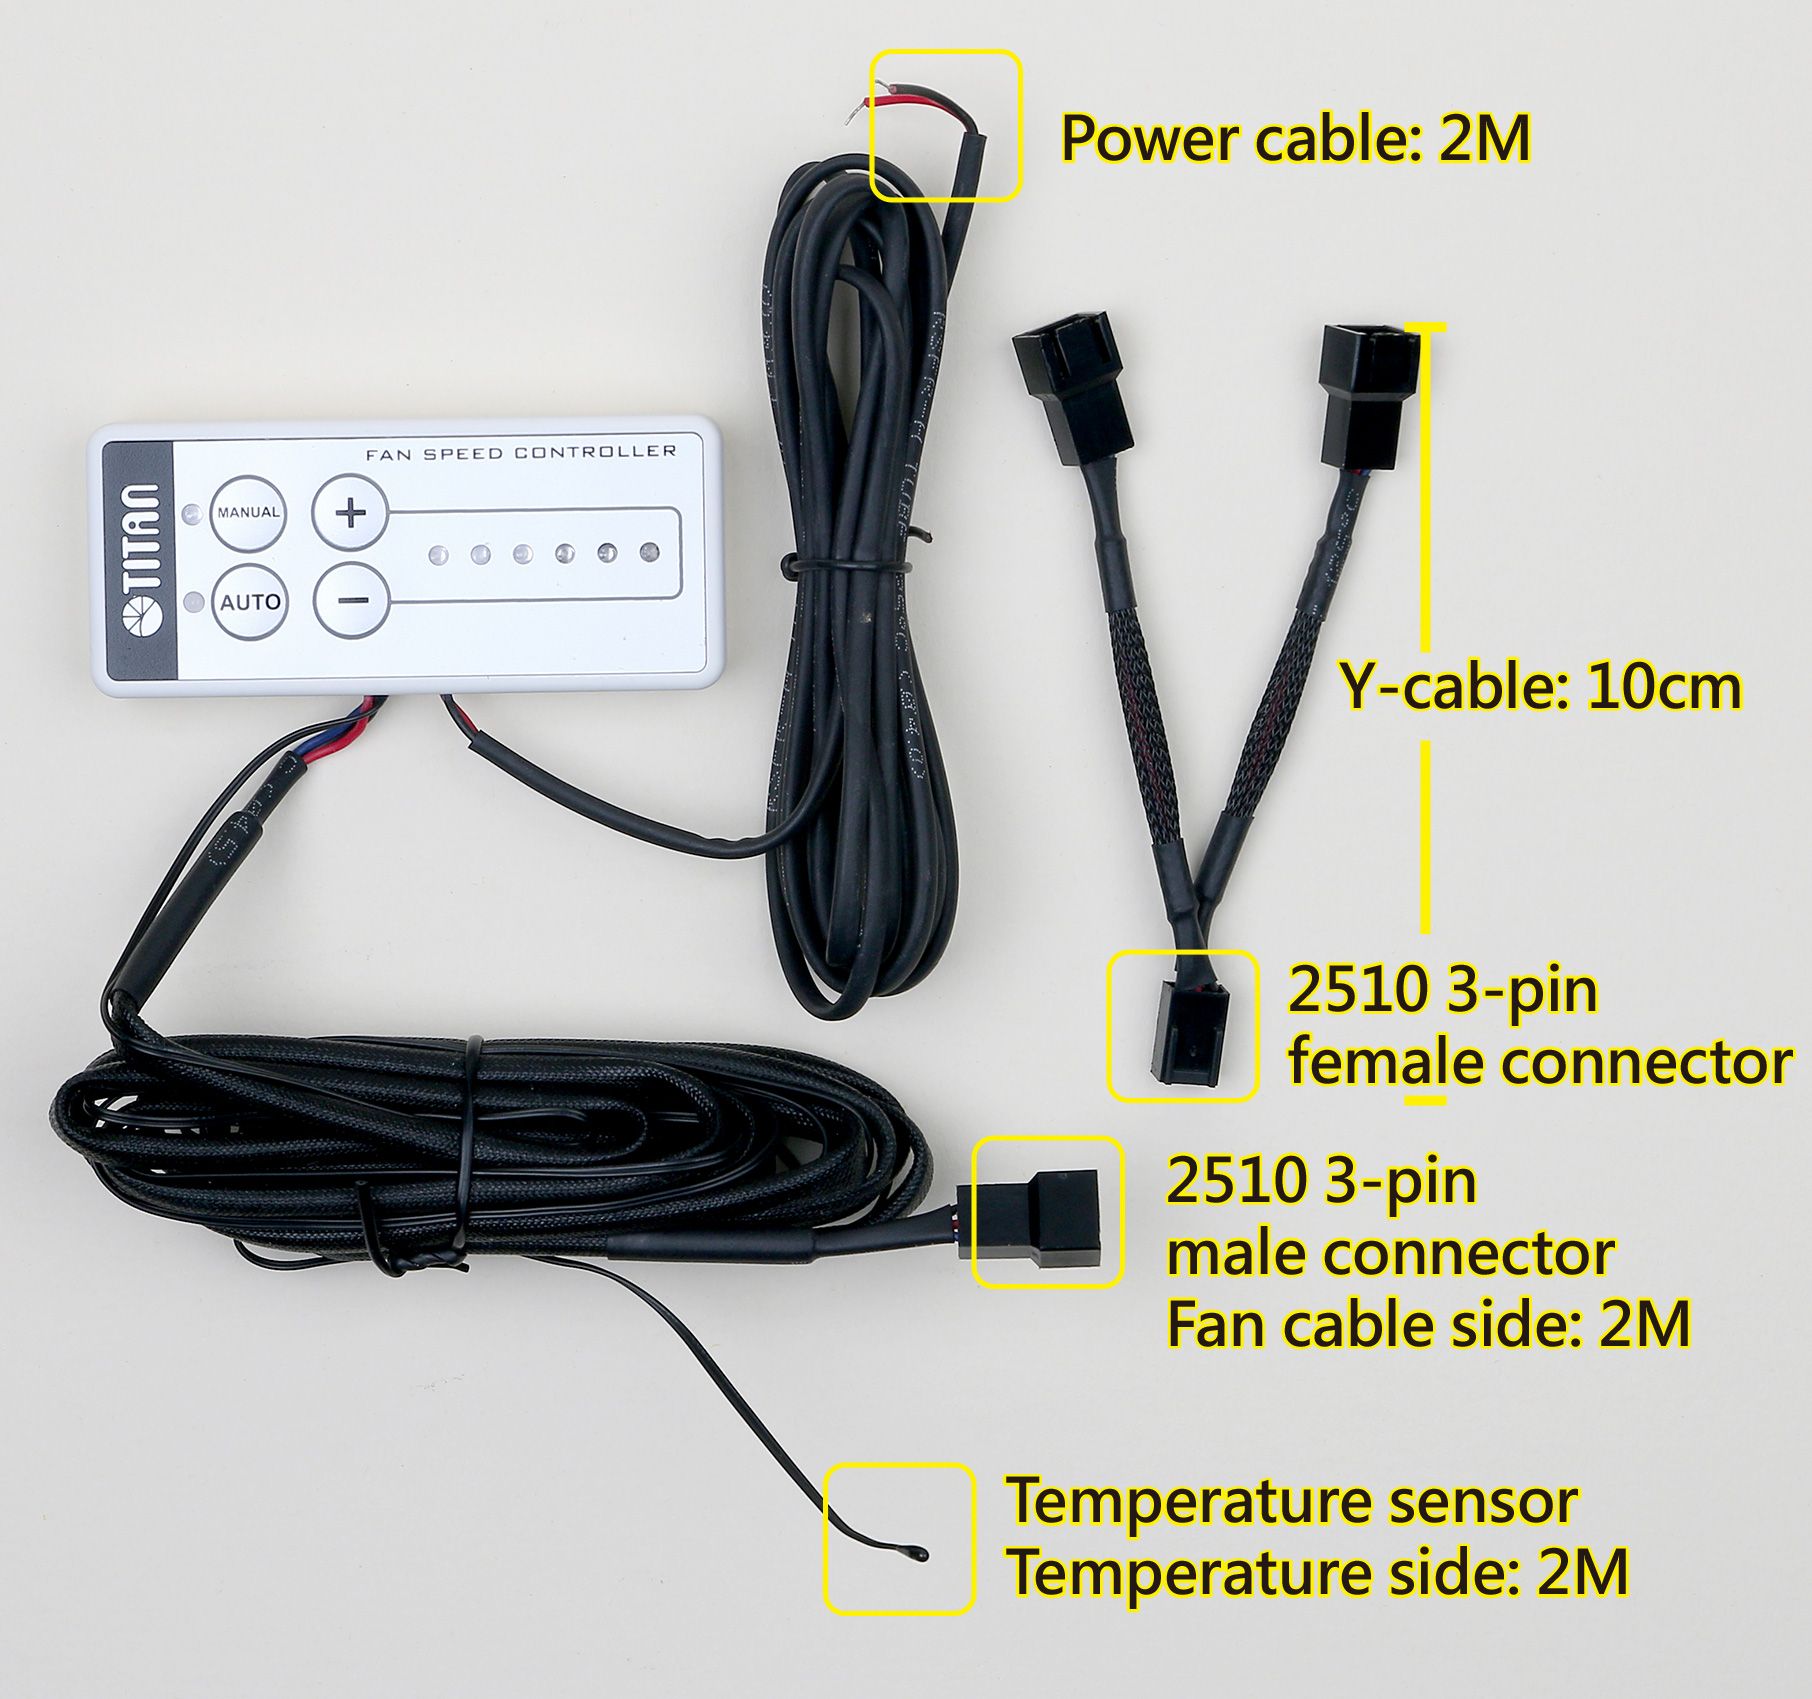 12V RV fan cable instruction